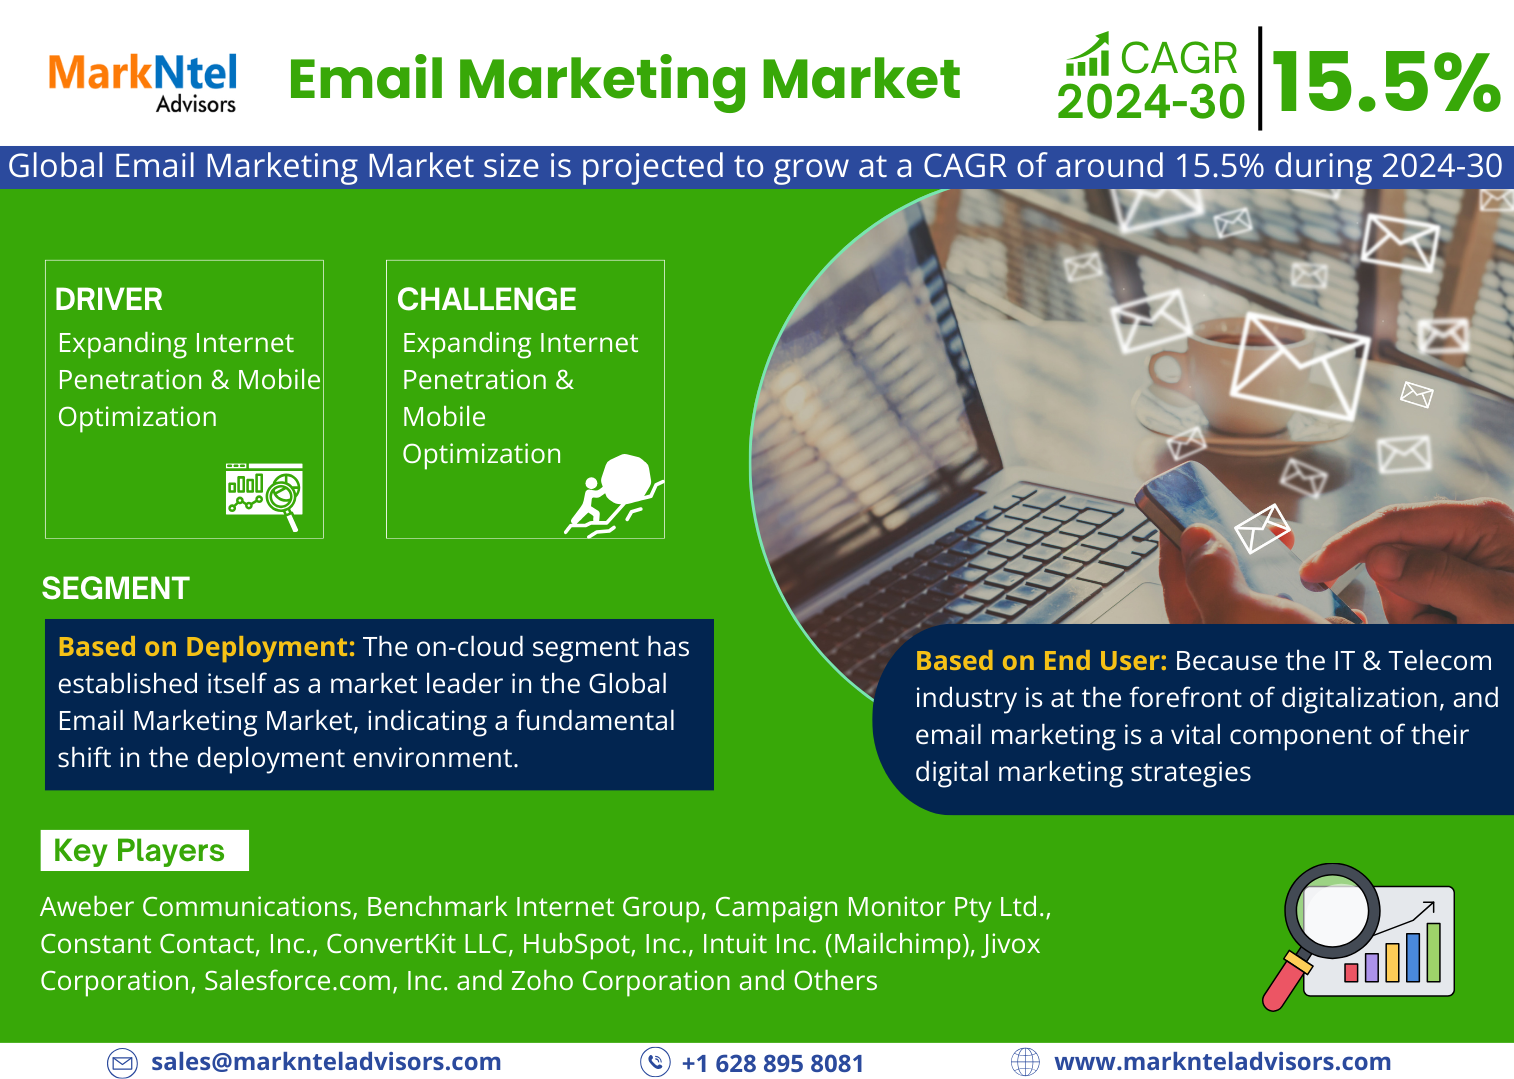 Global Email Market